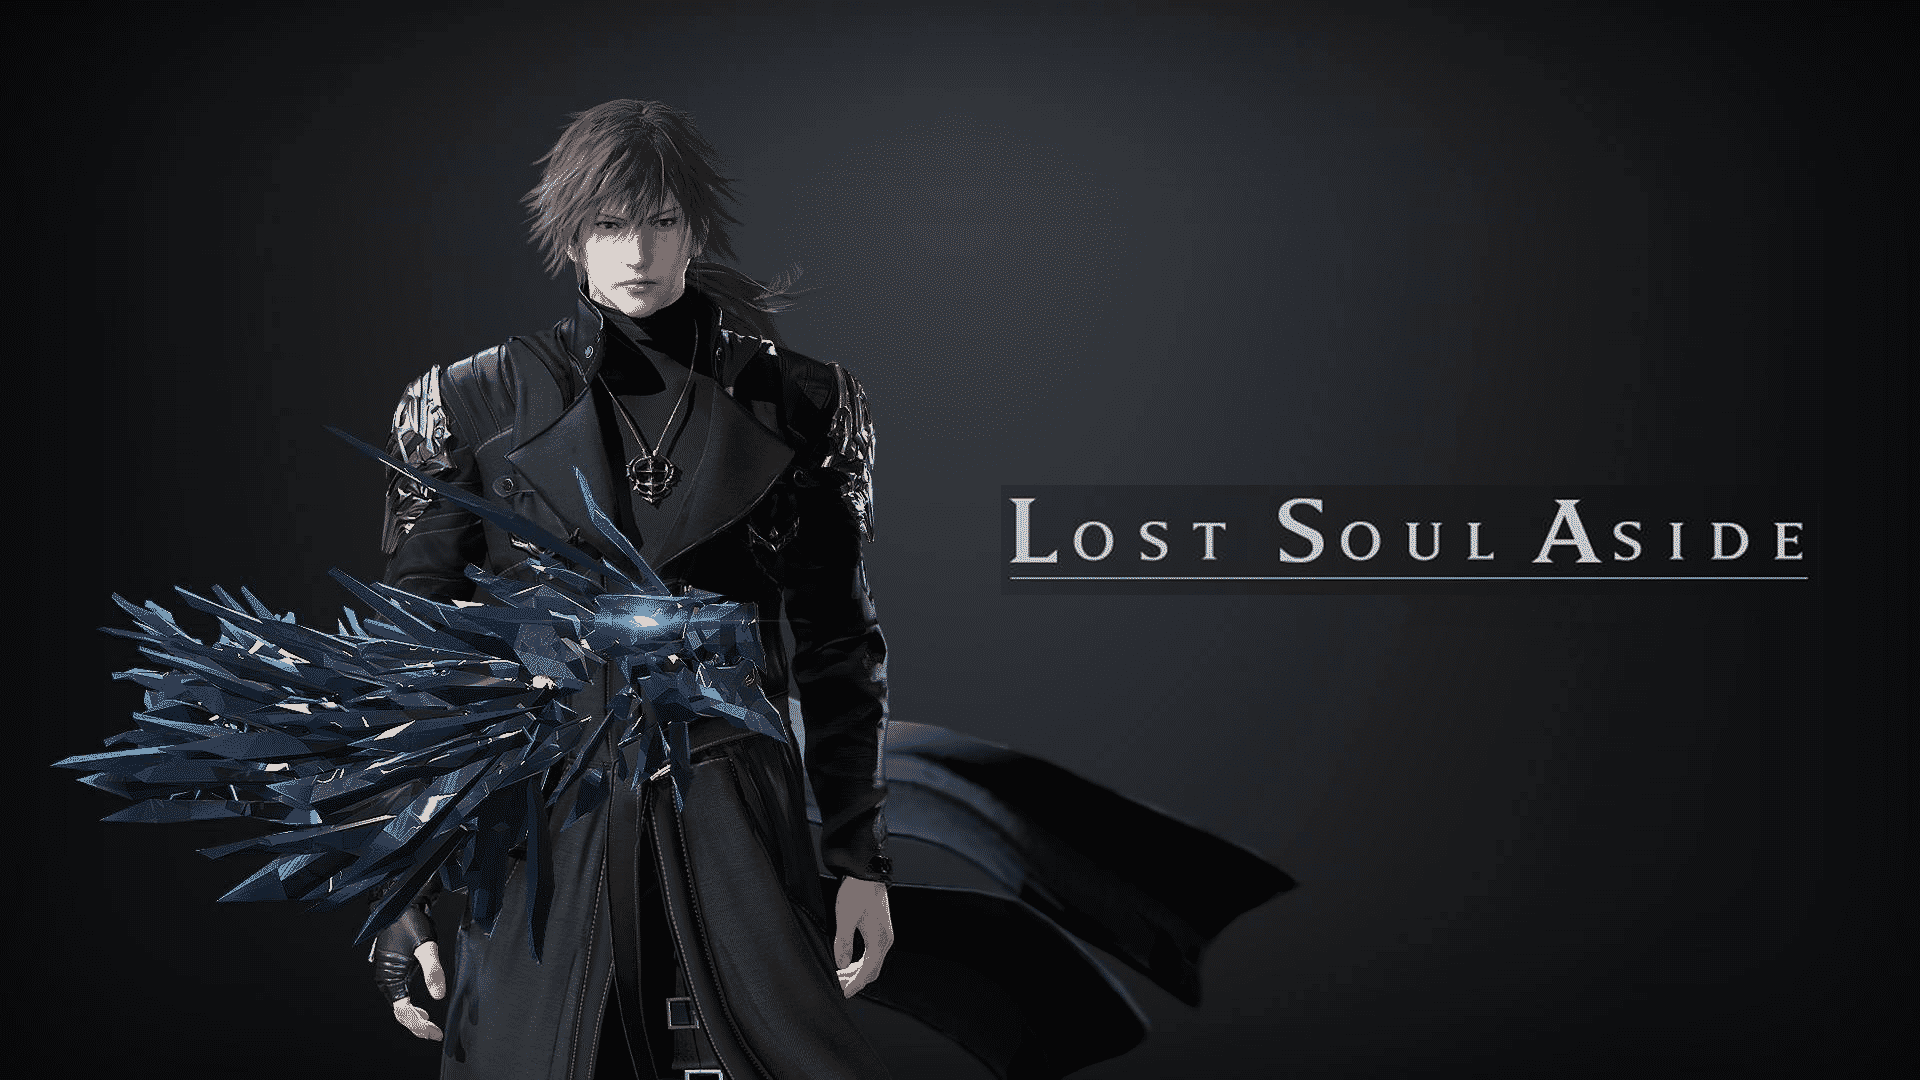 Lost Soul Aside, Lost Soul Aside PlayStation 4, Final Fantasy XVI, Lost Souls Aside Trailer, Action RPG PlayStation 5